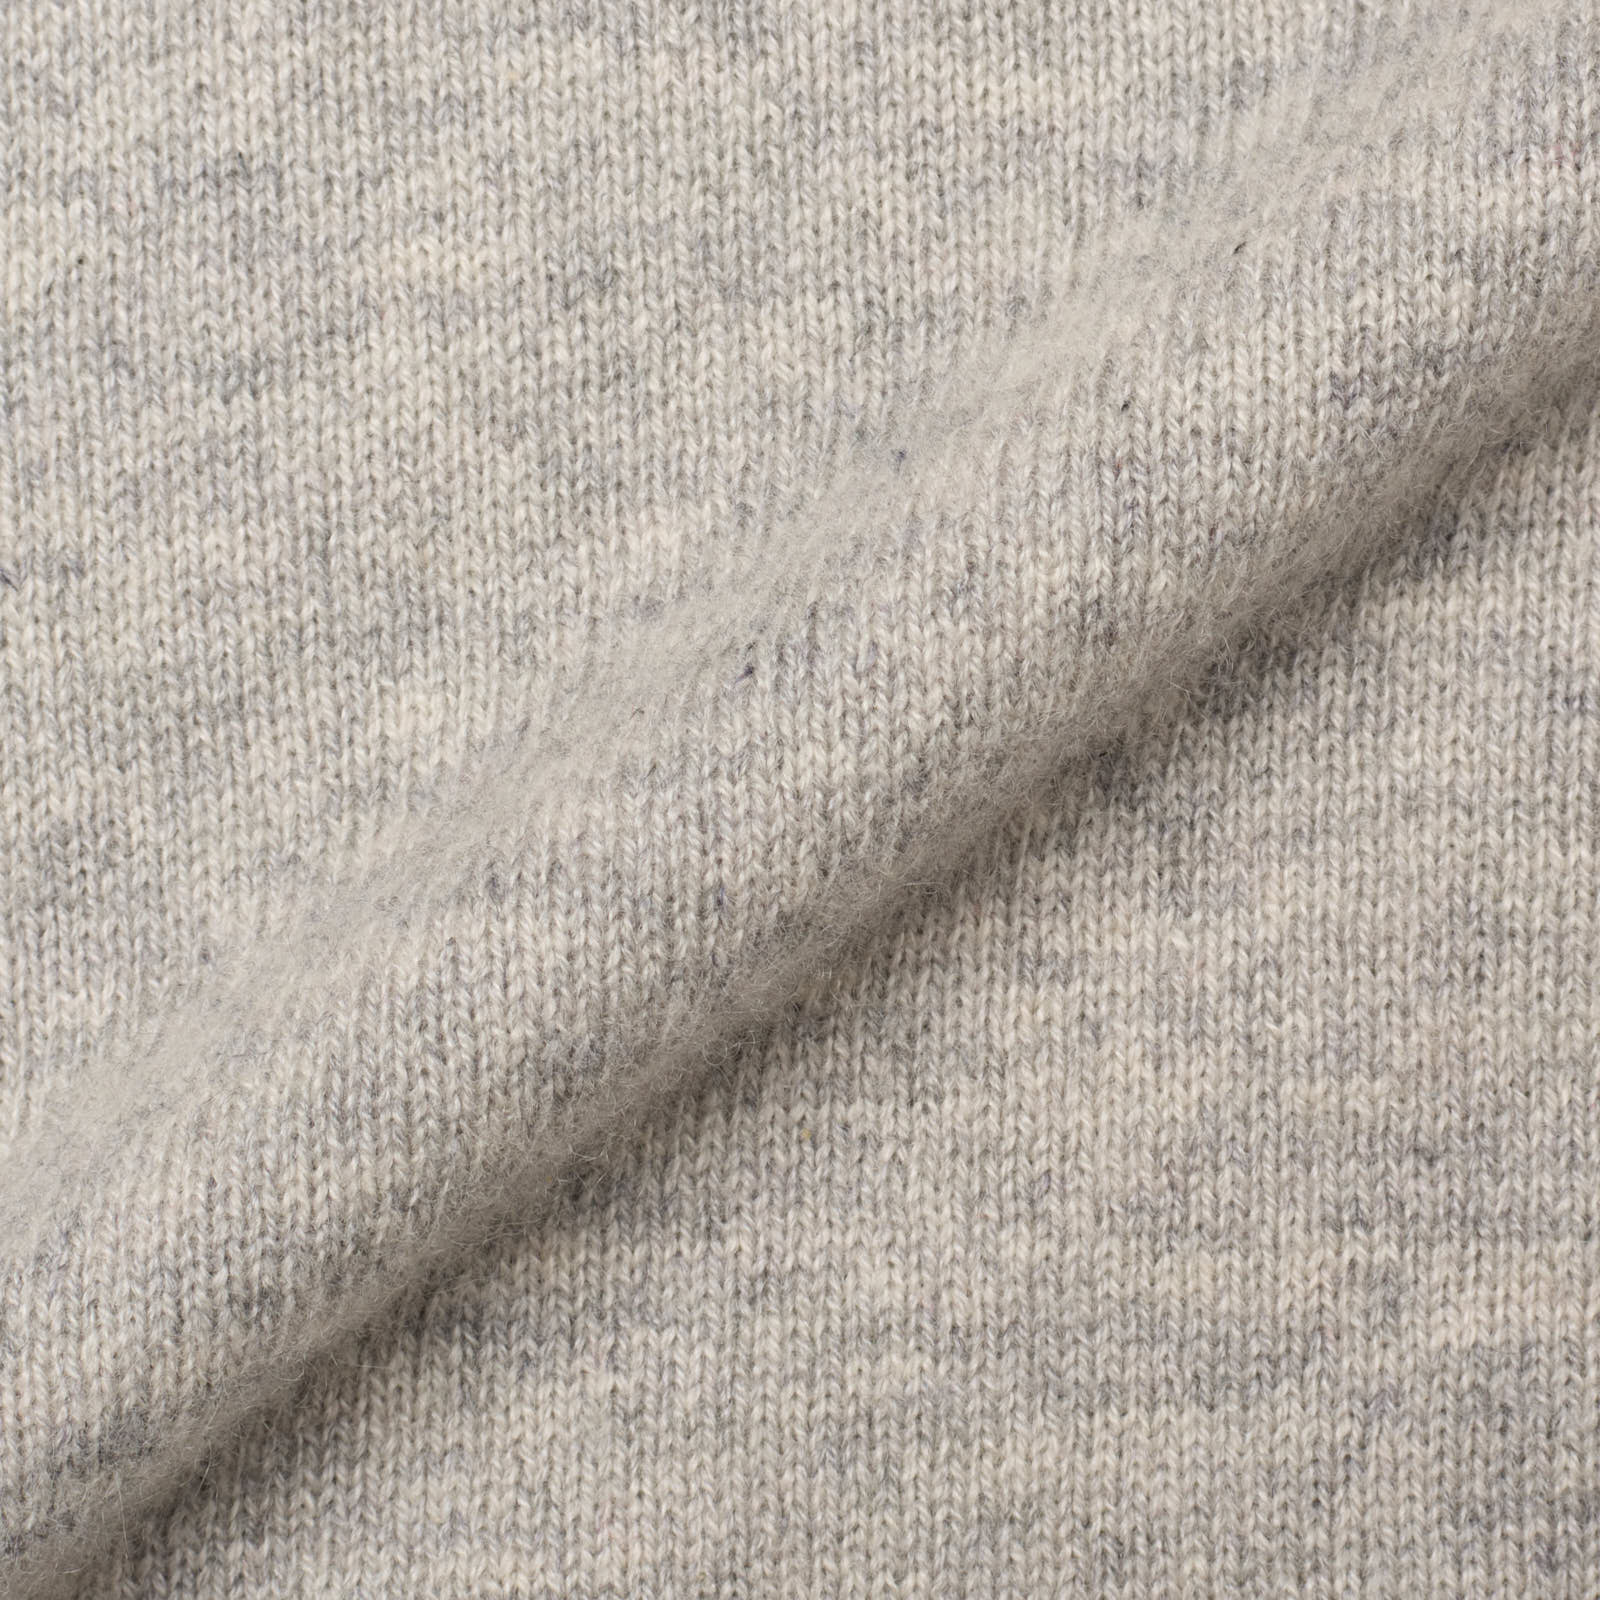 VANNUCCI Milano Gray Cashmere Knit Crewneck Sweater EU 48 NEW US S